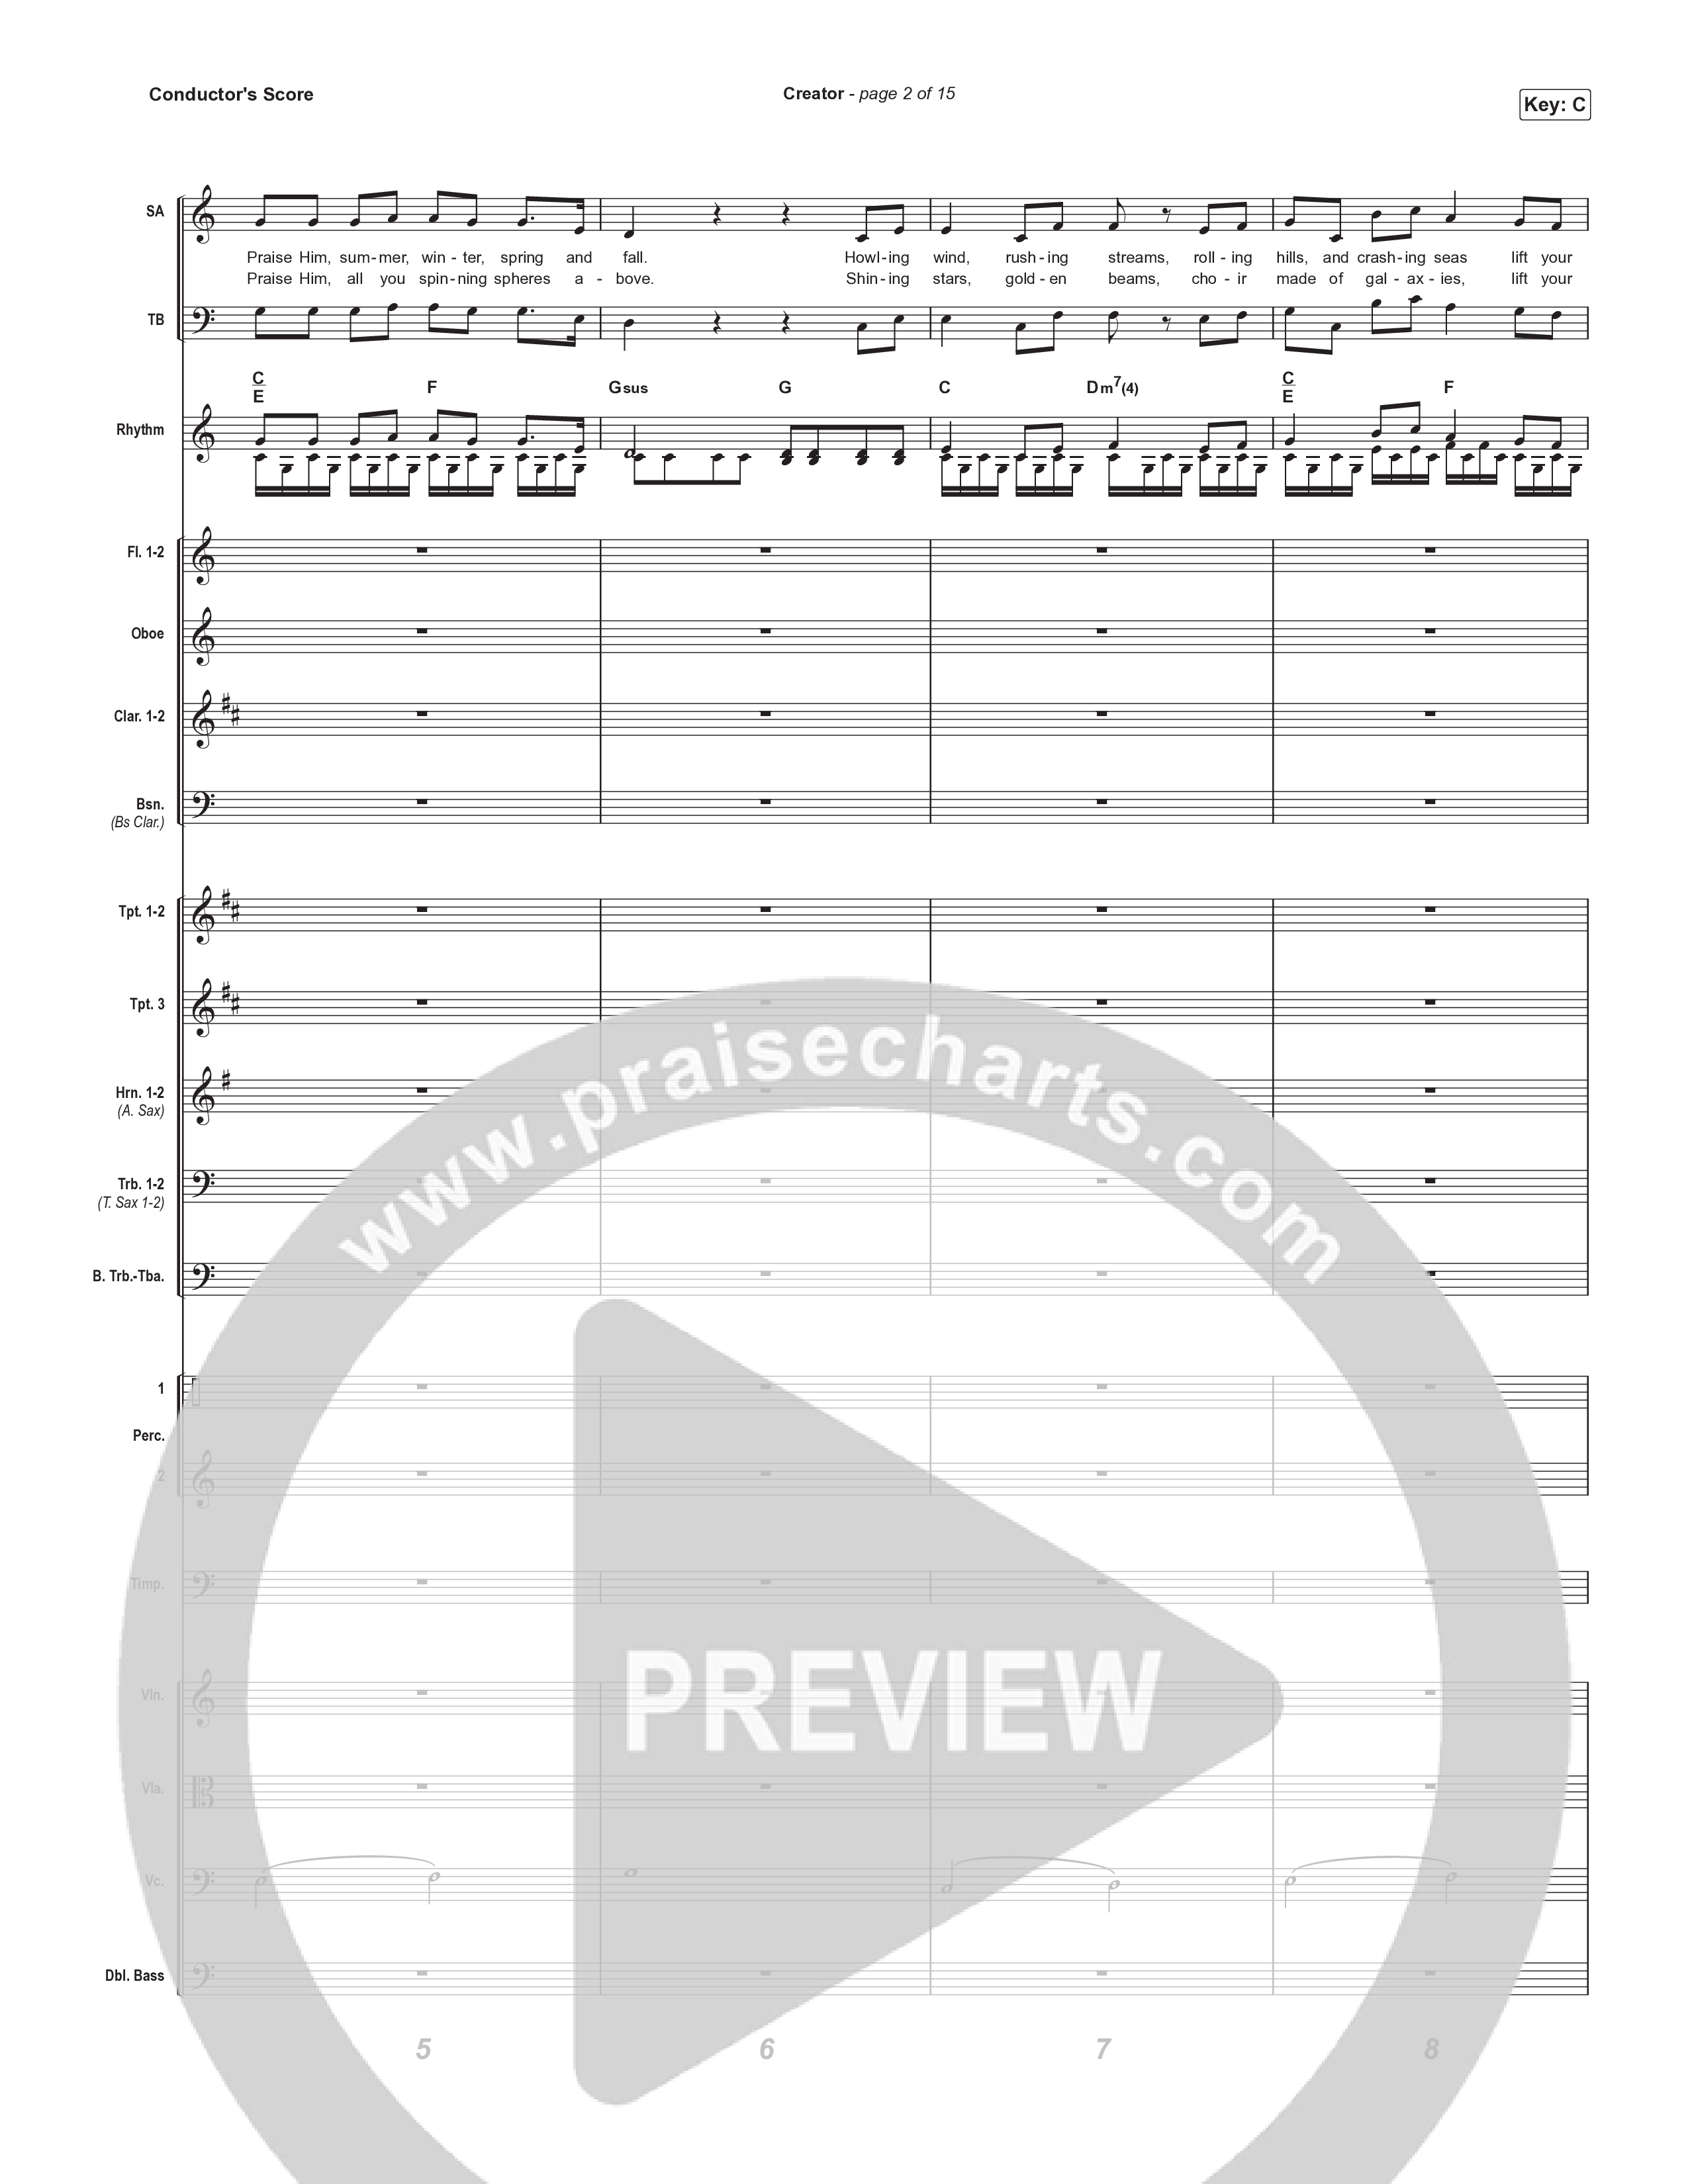 Creator (Sing It Now) Conductor's Score (Phil Wickham)